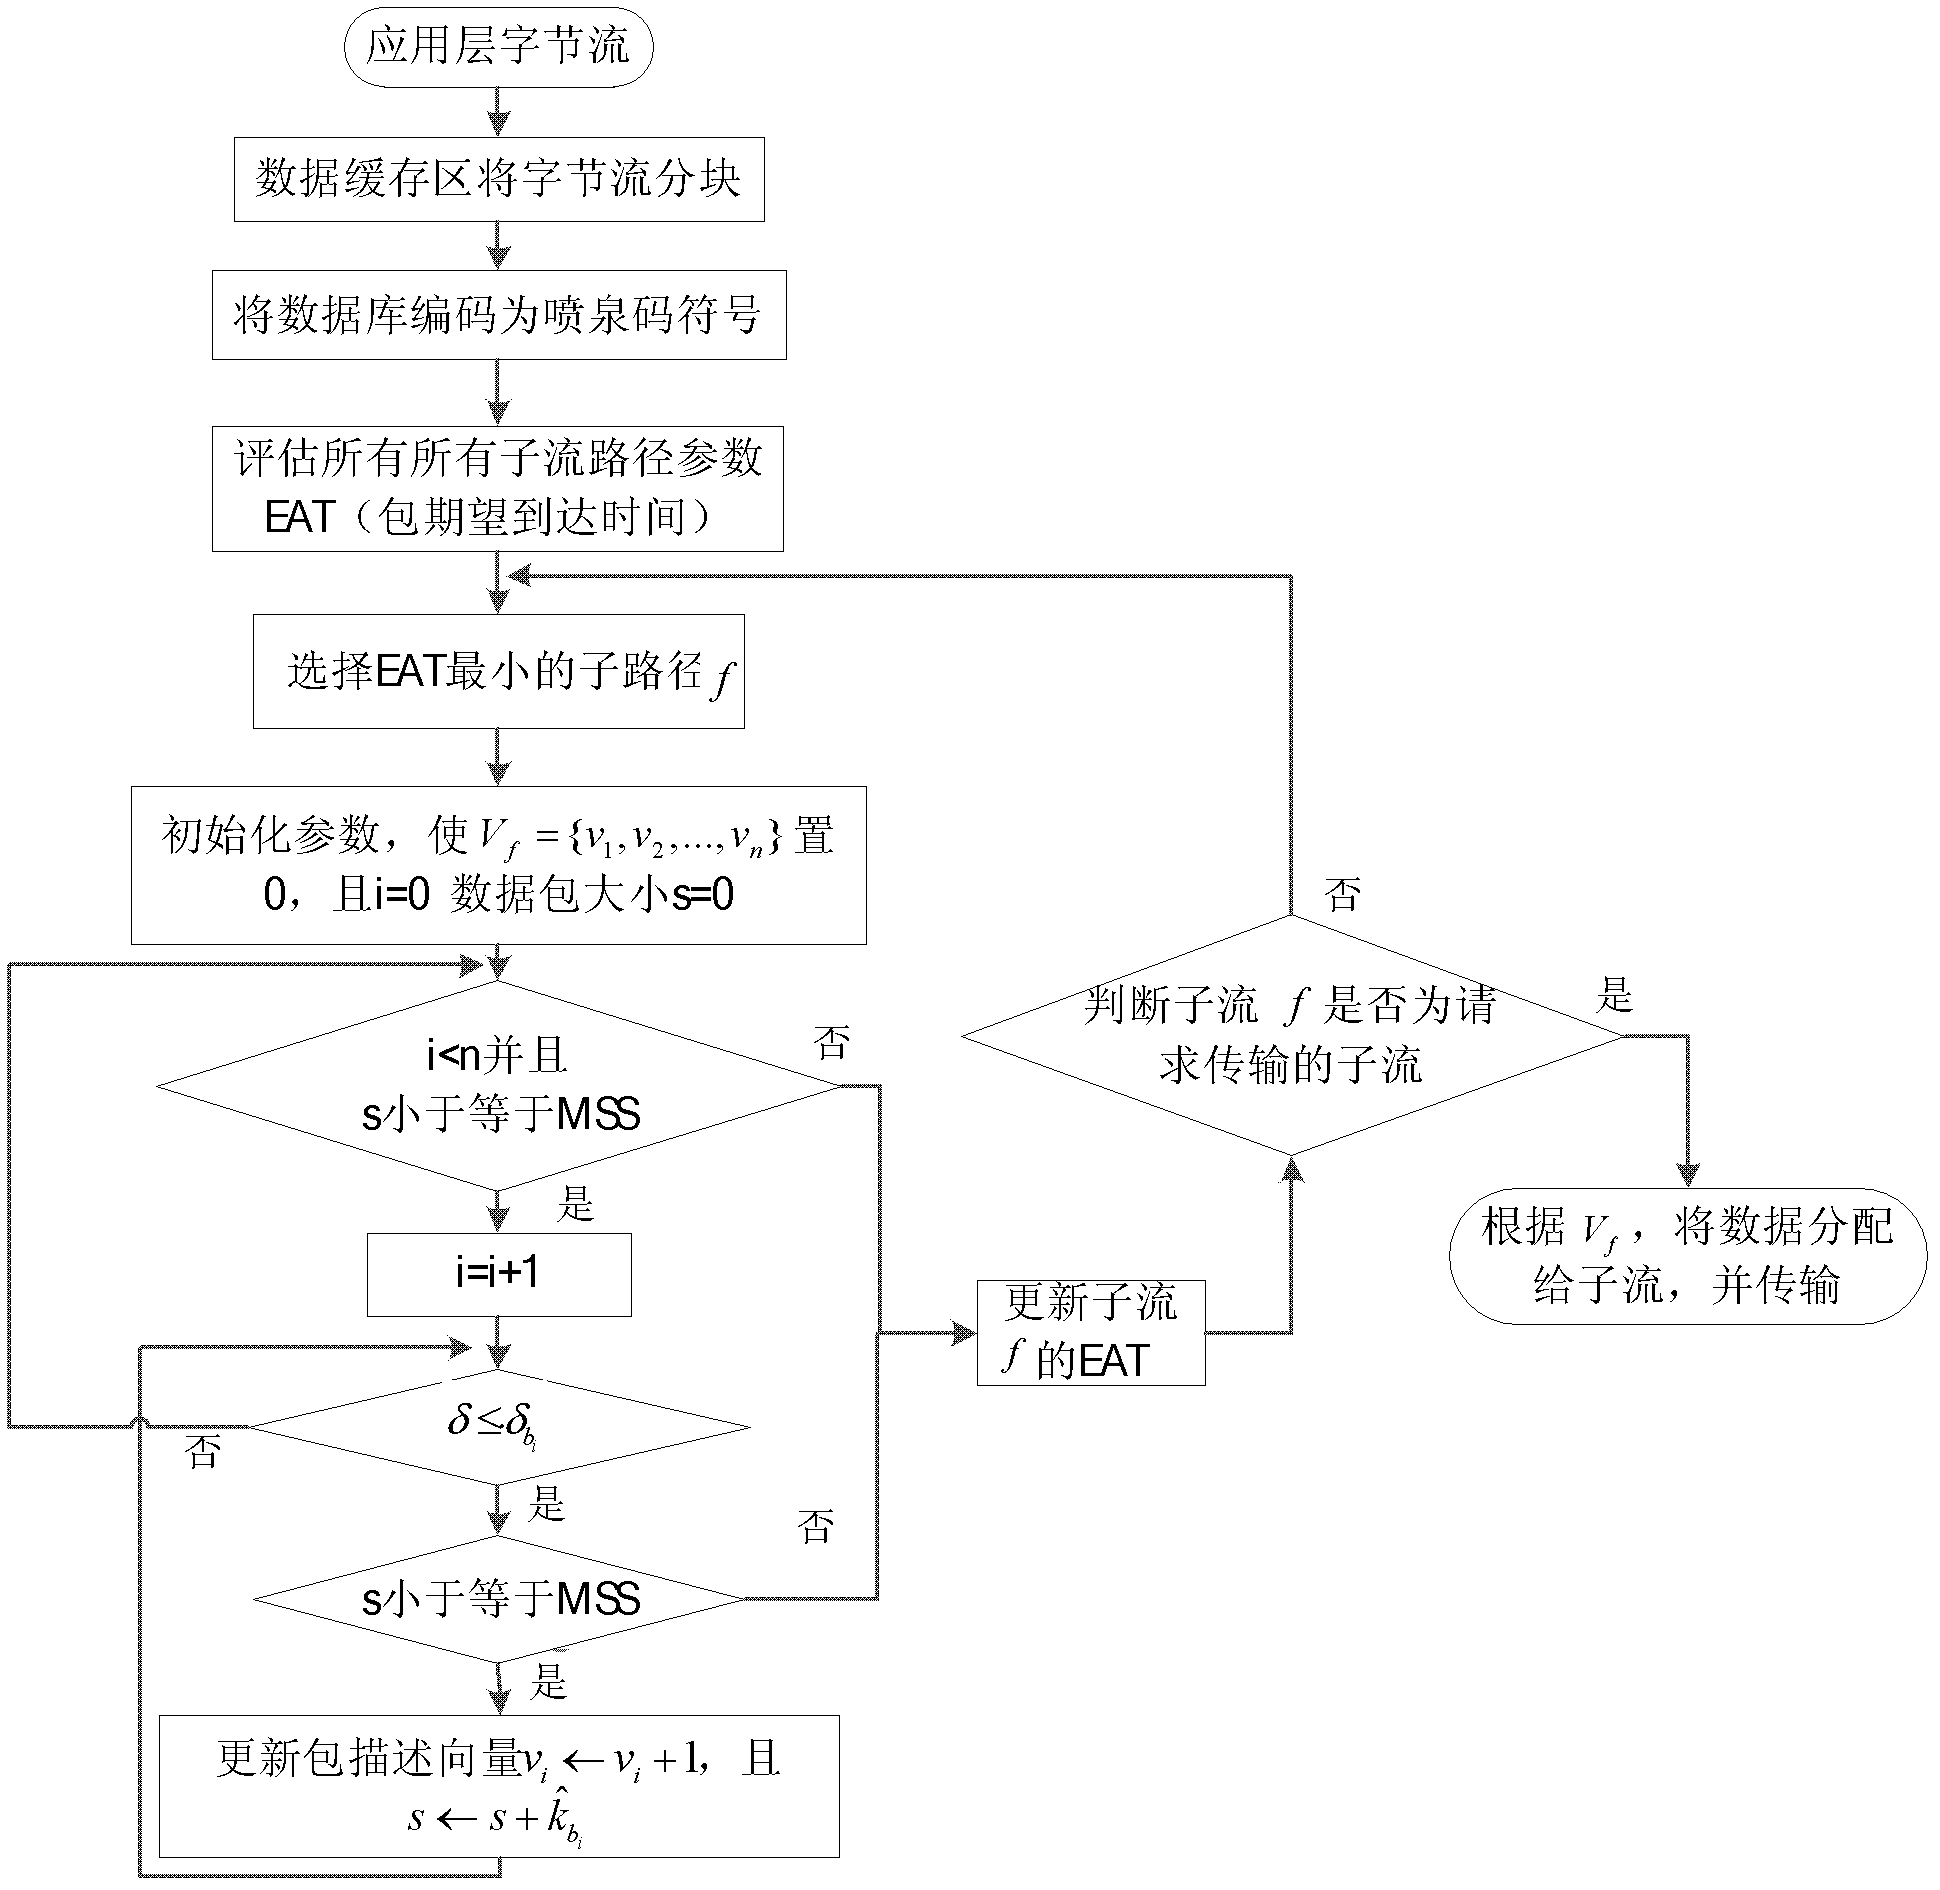 Multi-path TCP protocol based on fountain codes